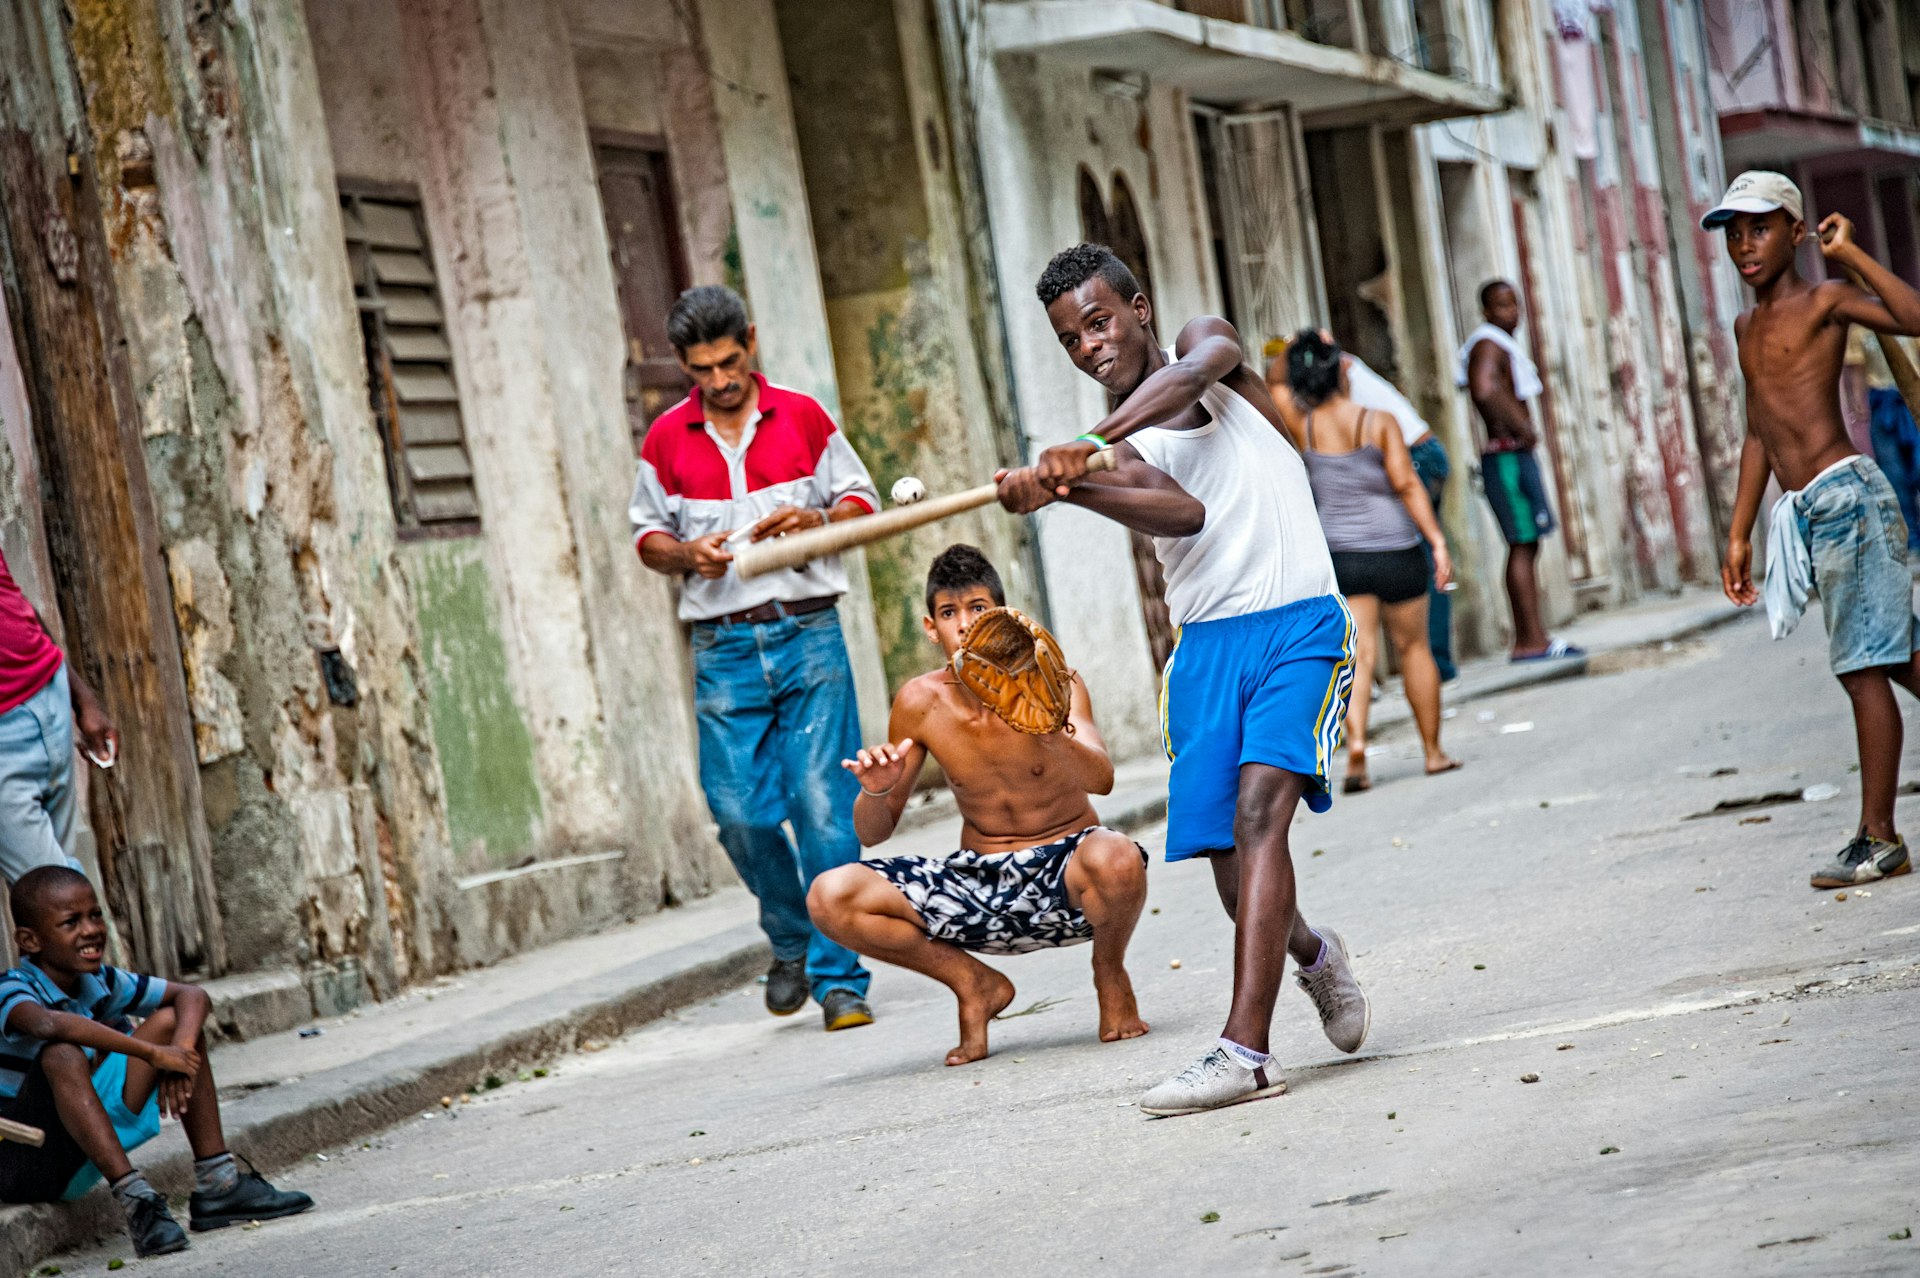 Kids playing ball on a street in Havana.